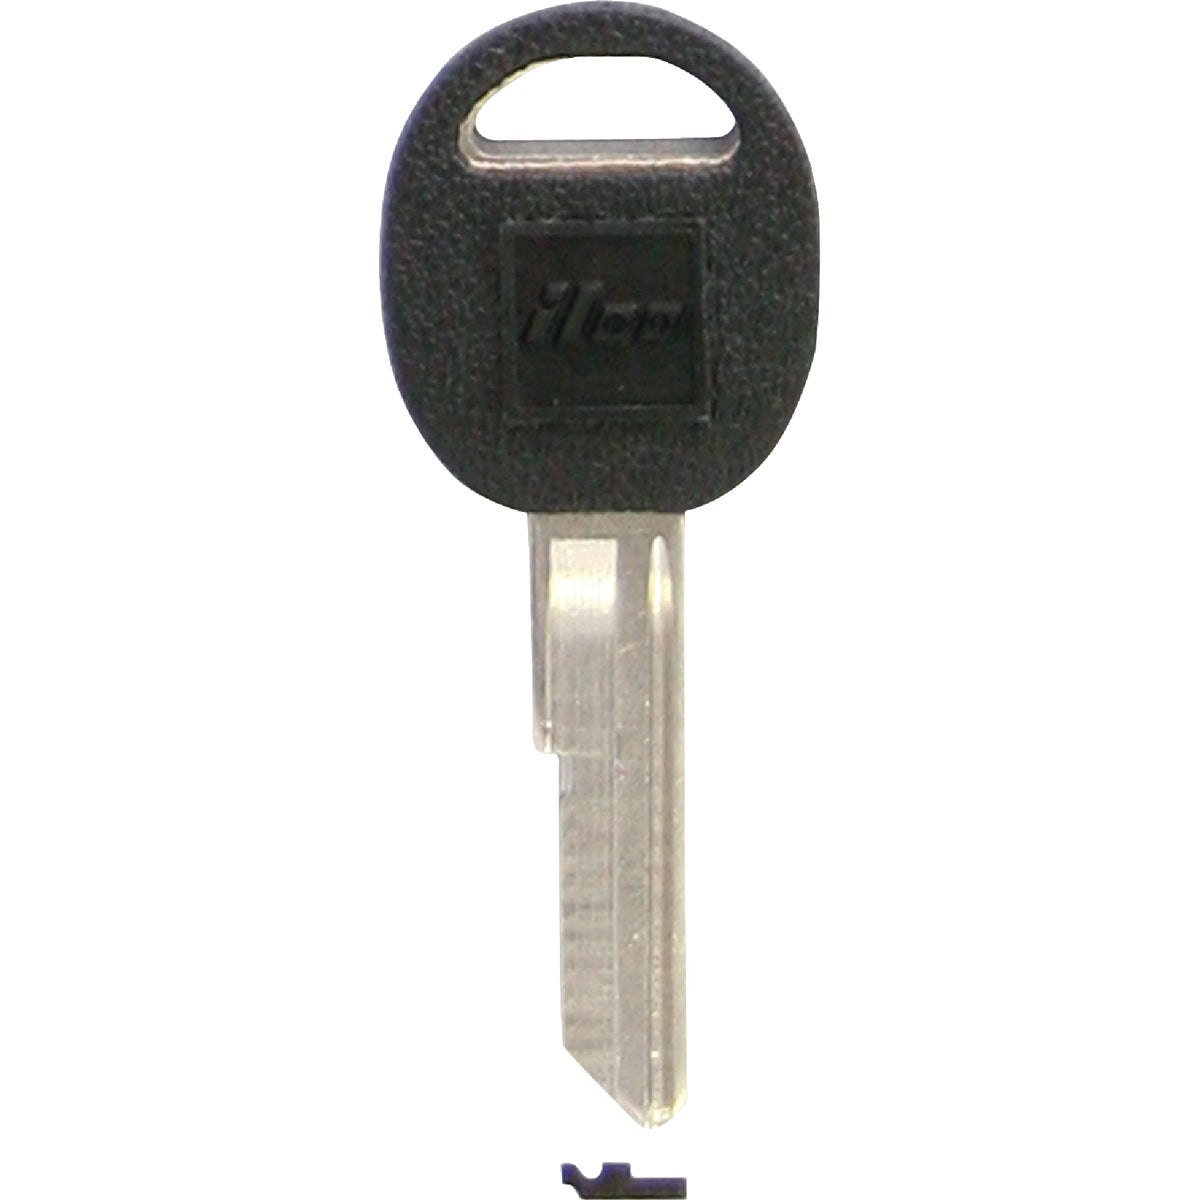 ILCO GM Nickel Plated Automotive Key, B45-P / B45P (5-Pack)